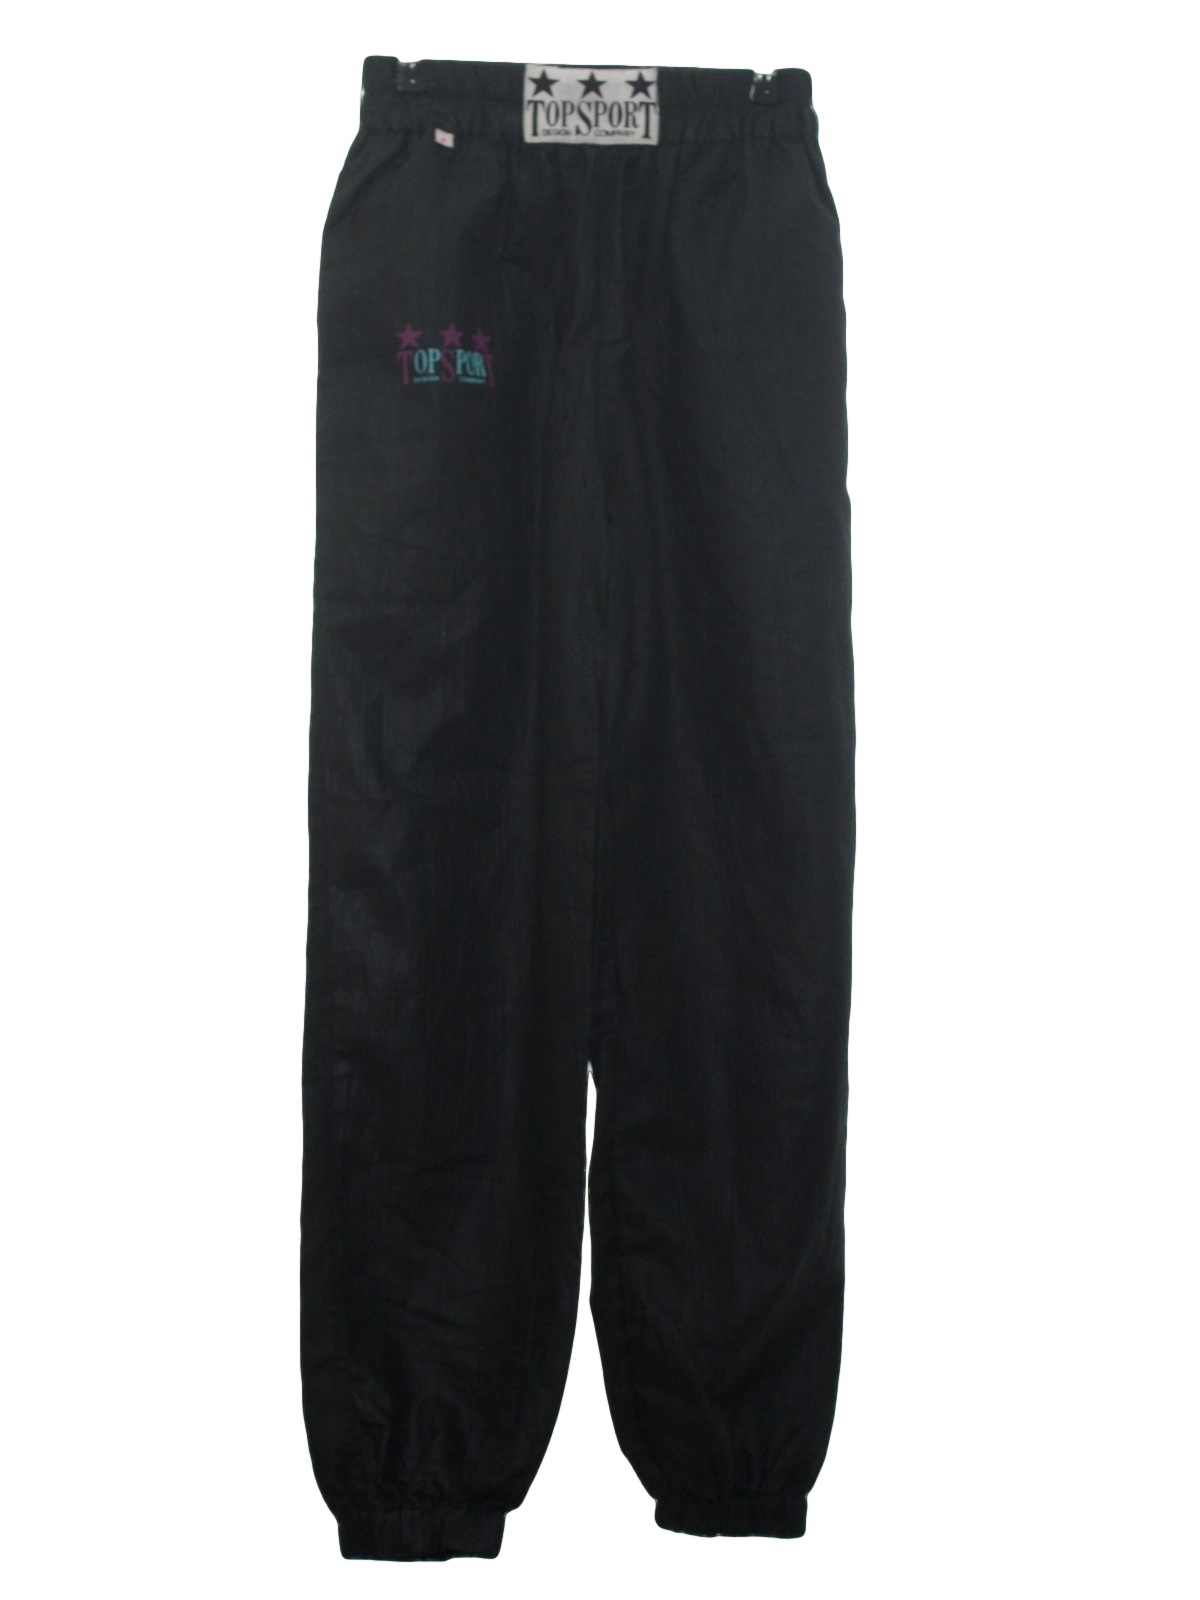 1980's Vintage Top Sport Pants: 80s -Top Sport- Mens shimmery black ...